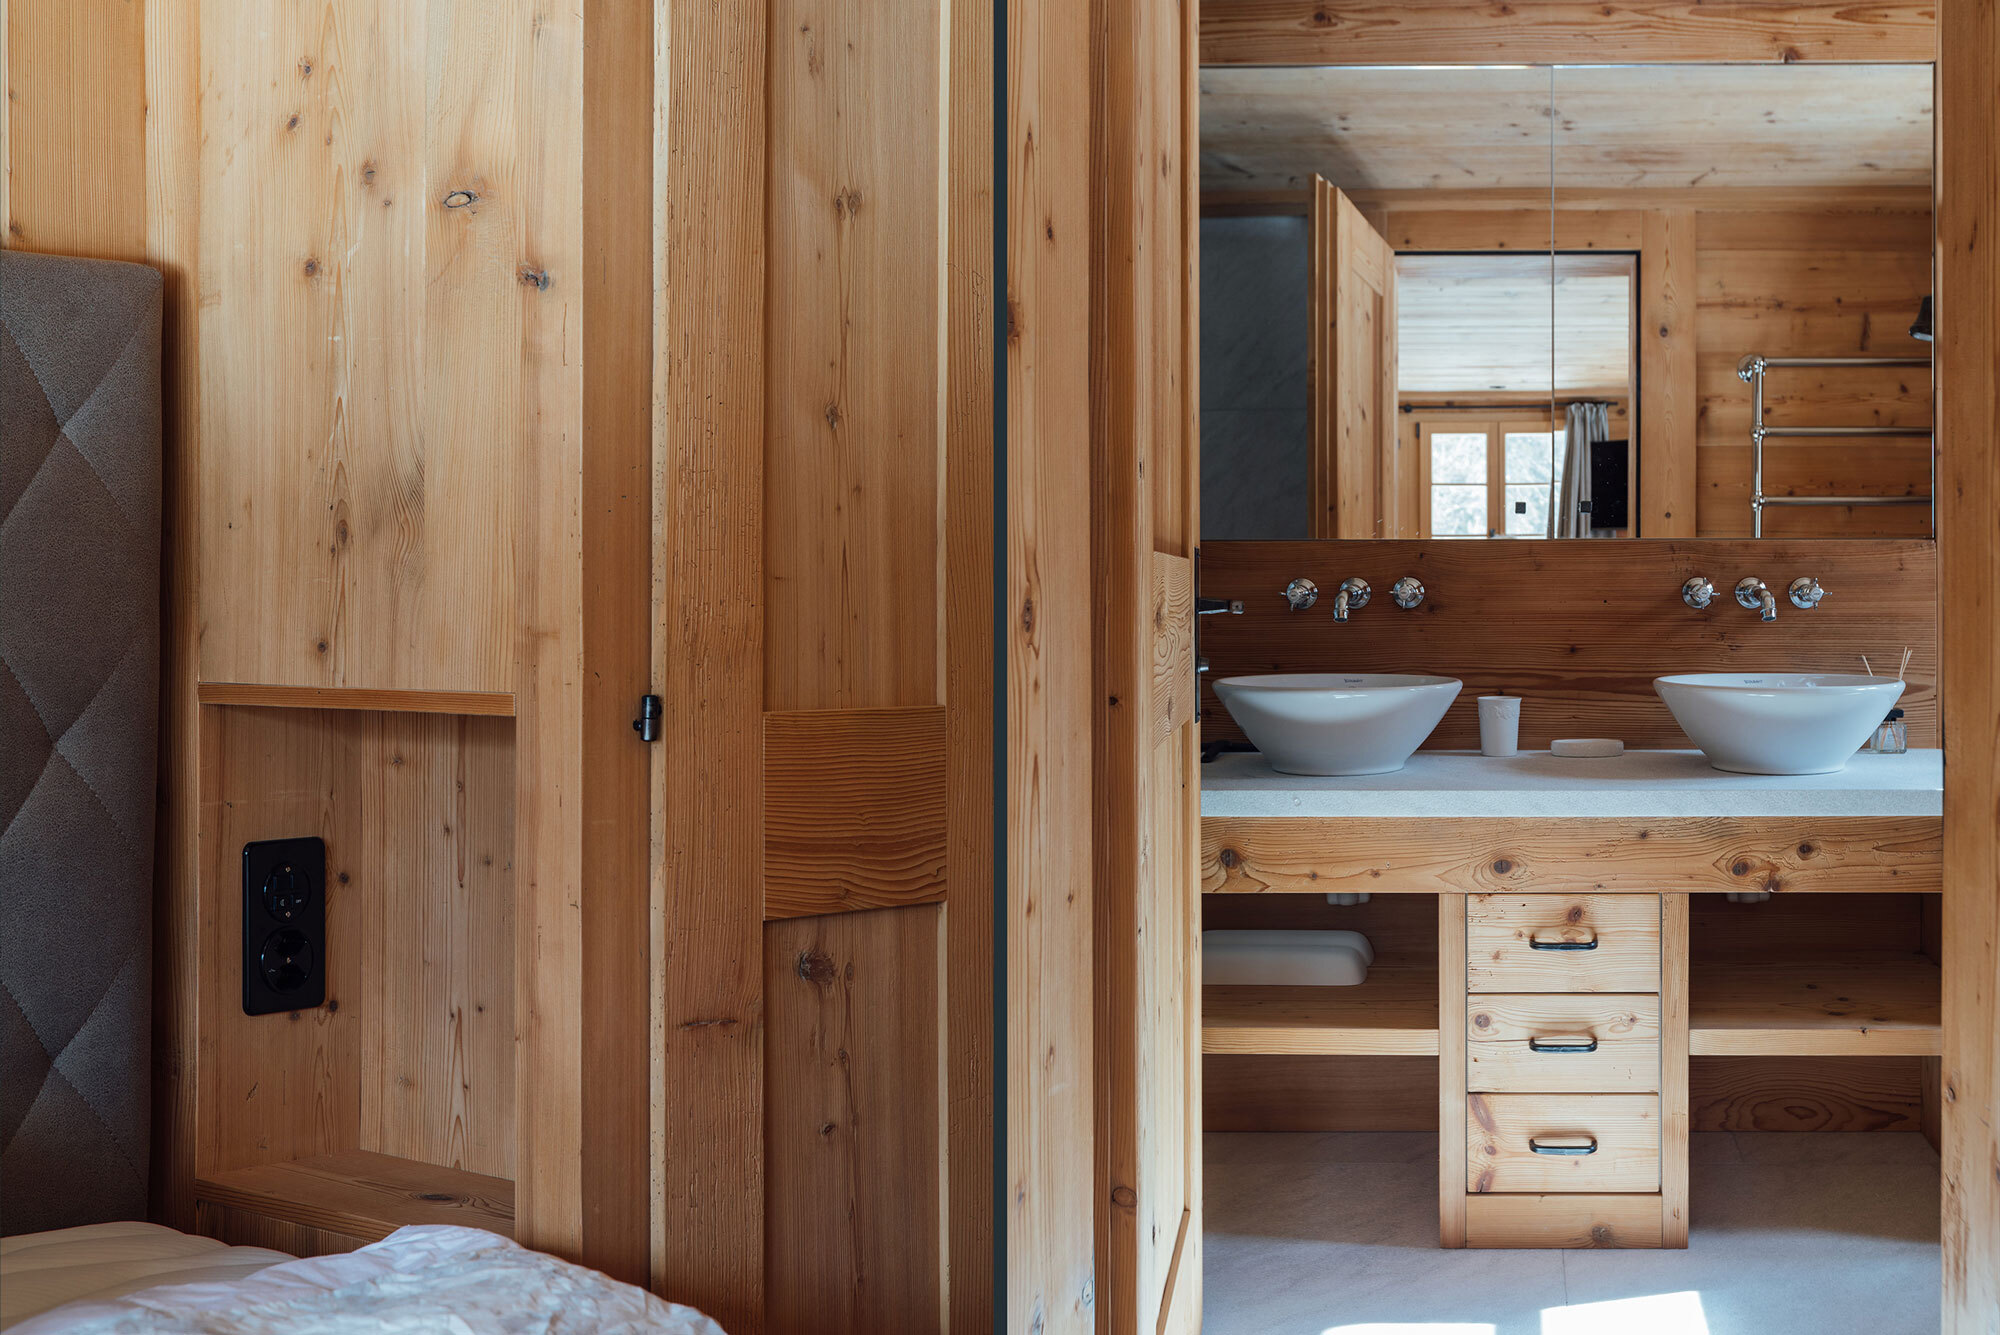 07-bathroom-wood-niche-wood-cabinet.jpg